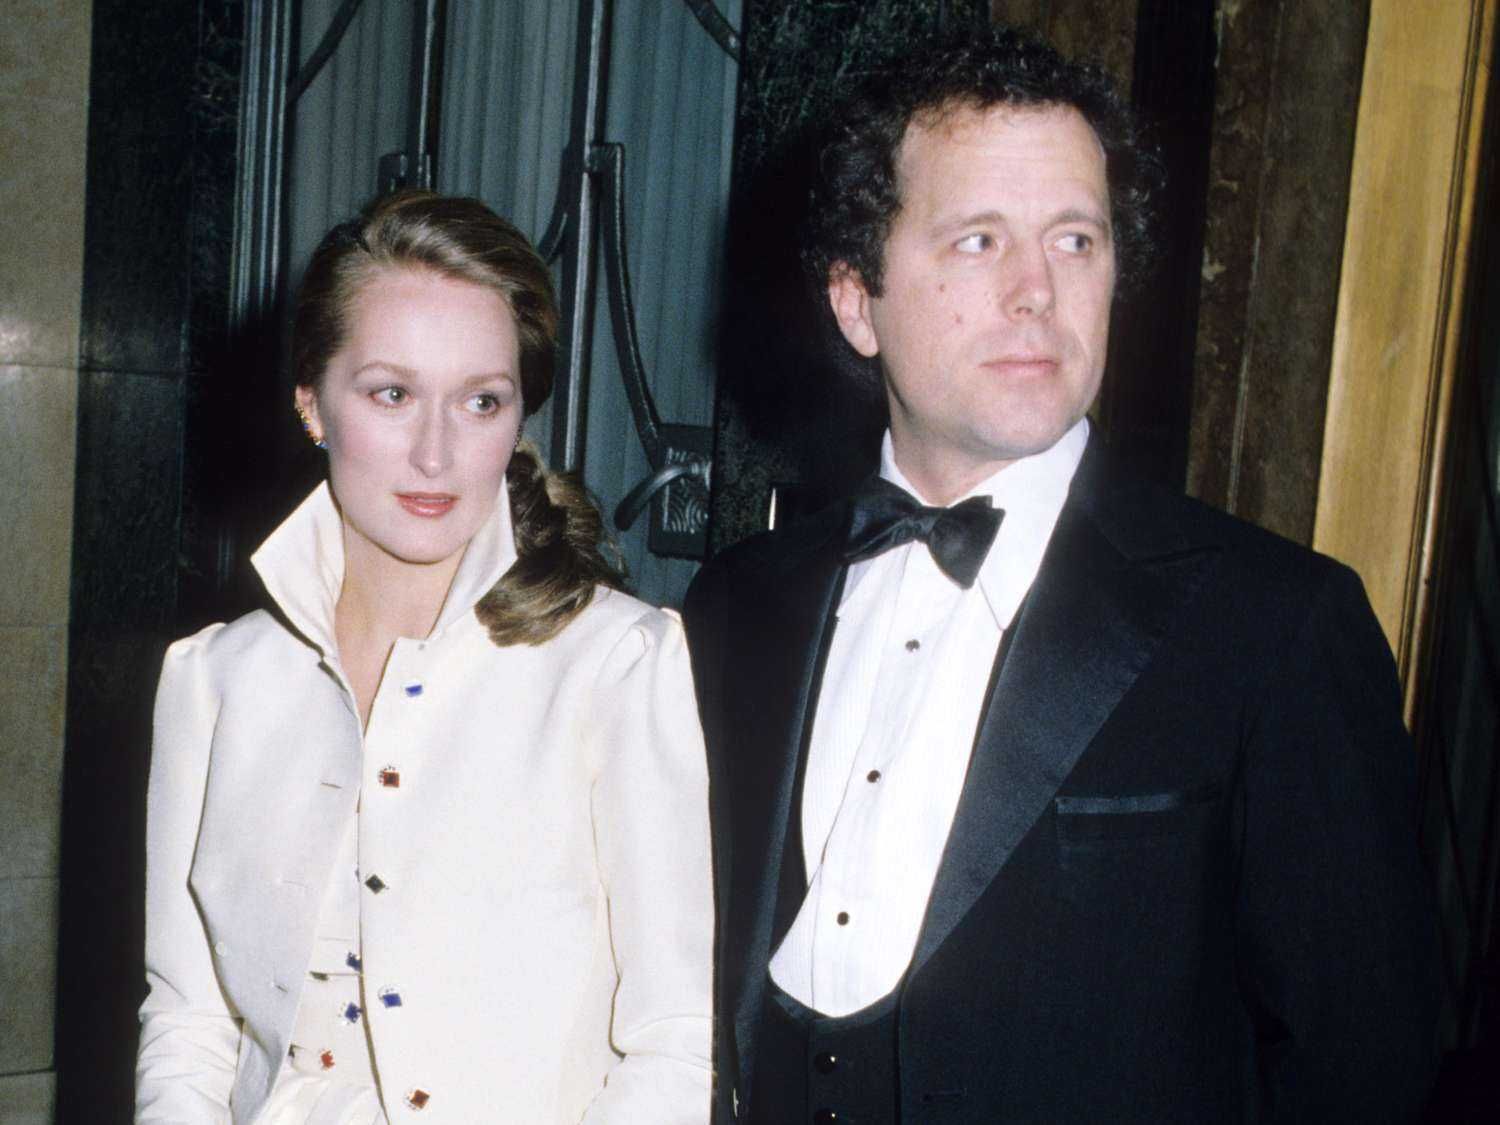 Meryl Streep and Don Gummer (Source: People)